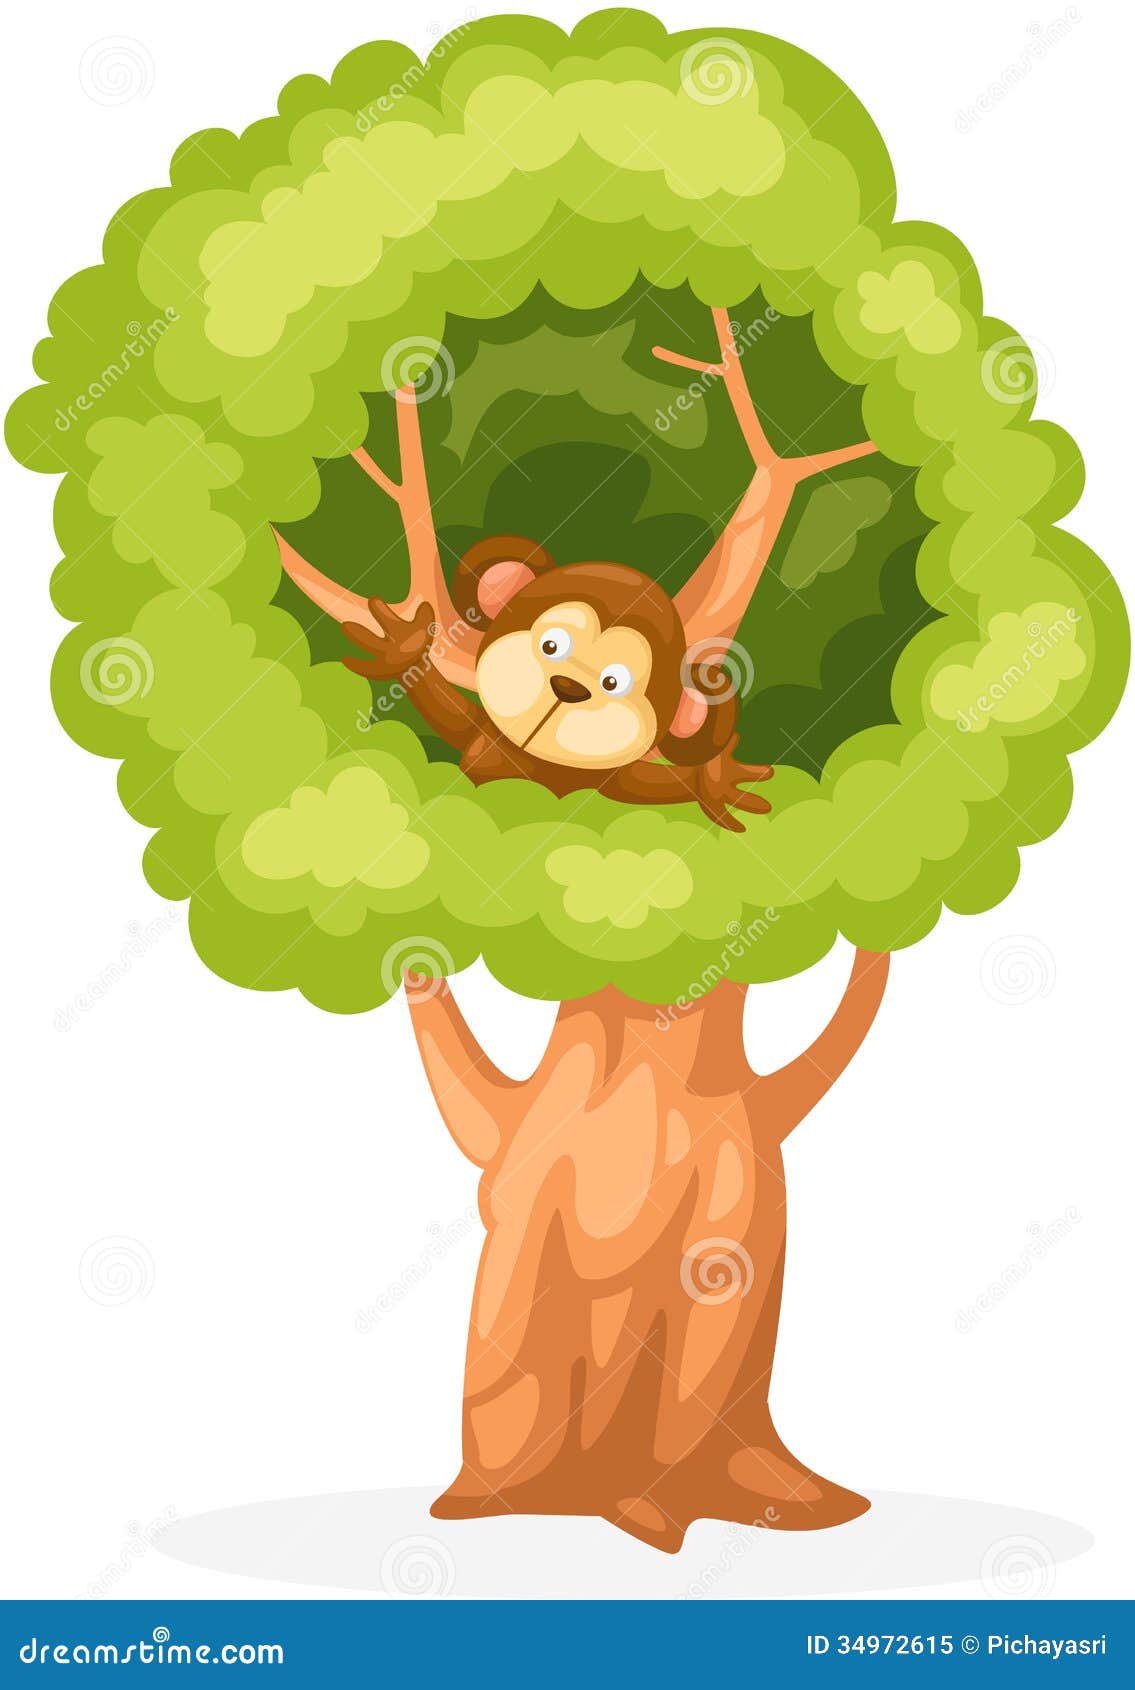 Clipart Of Monkeys In Trees